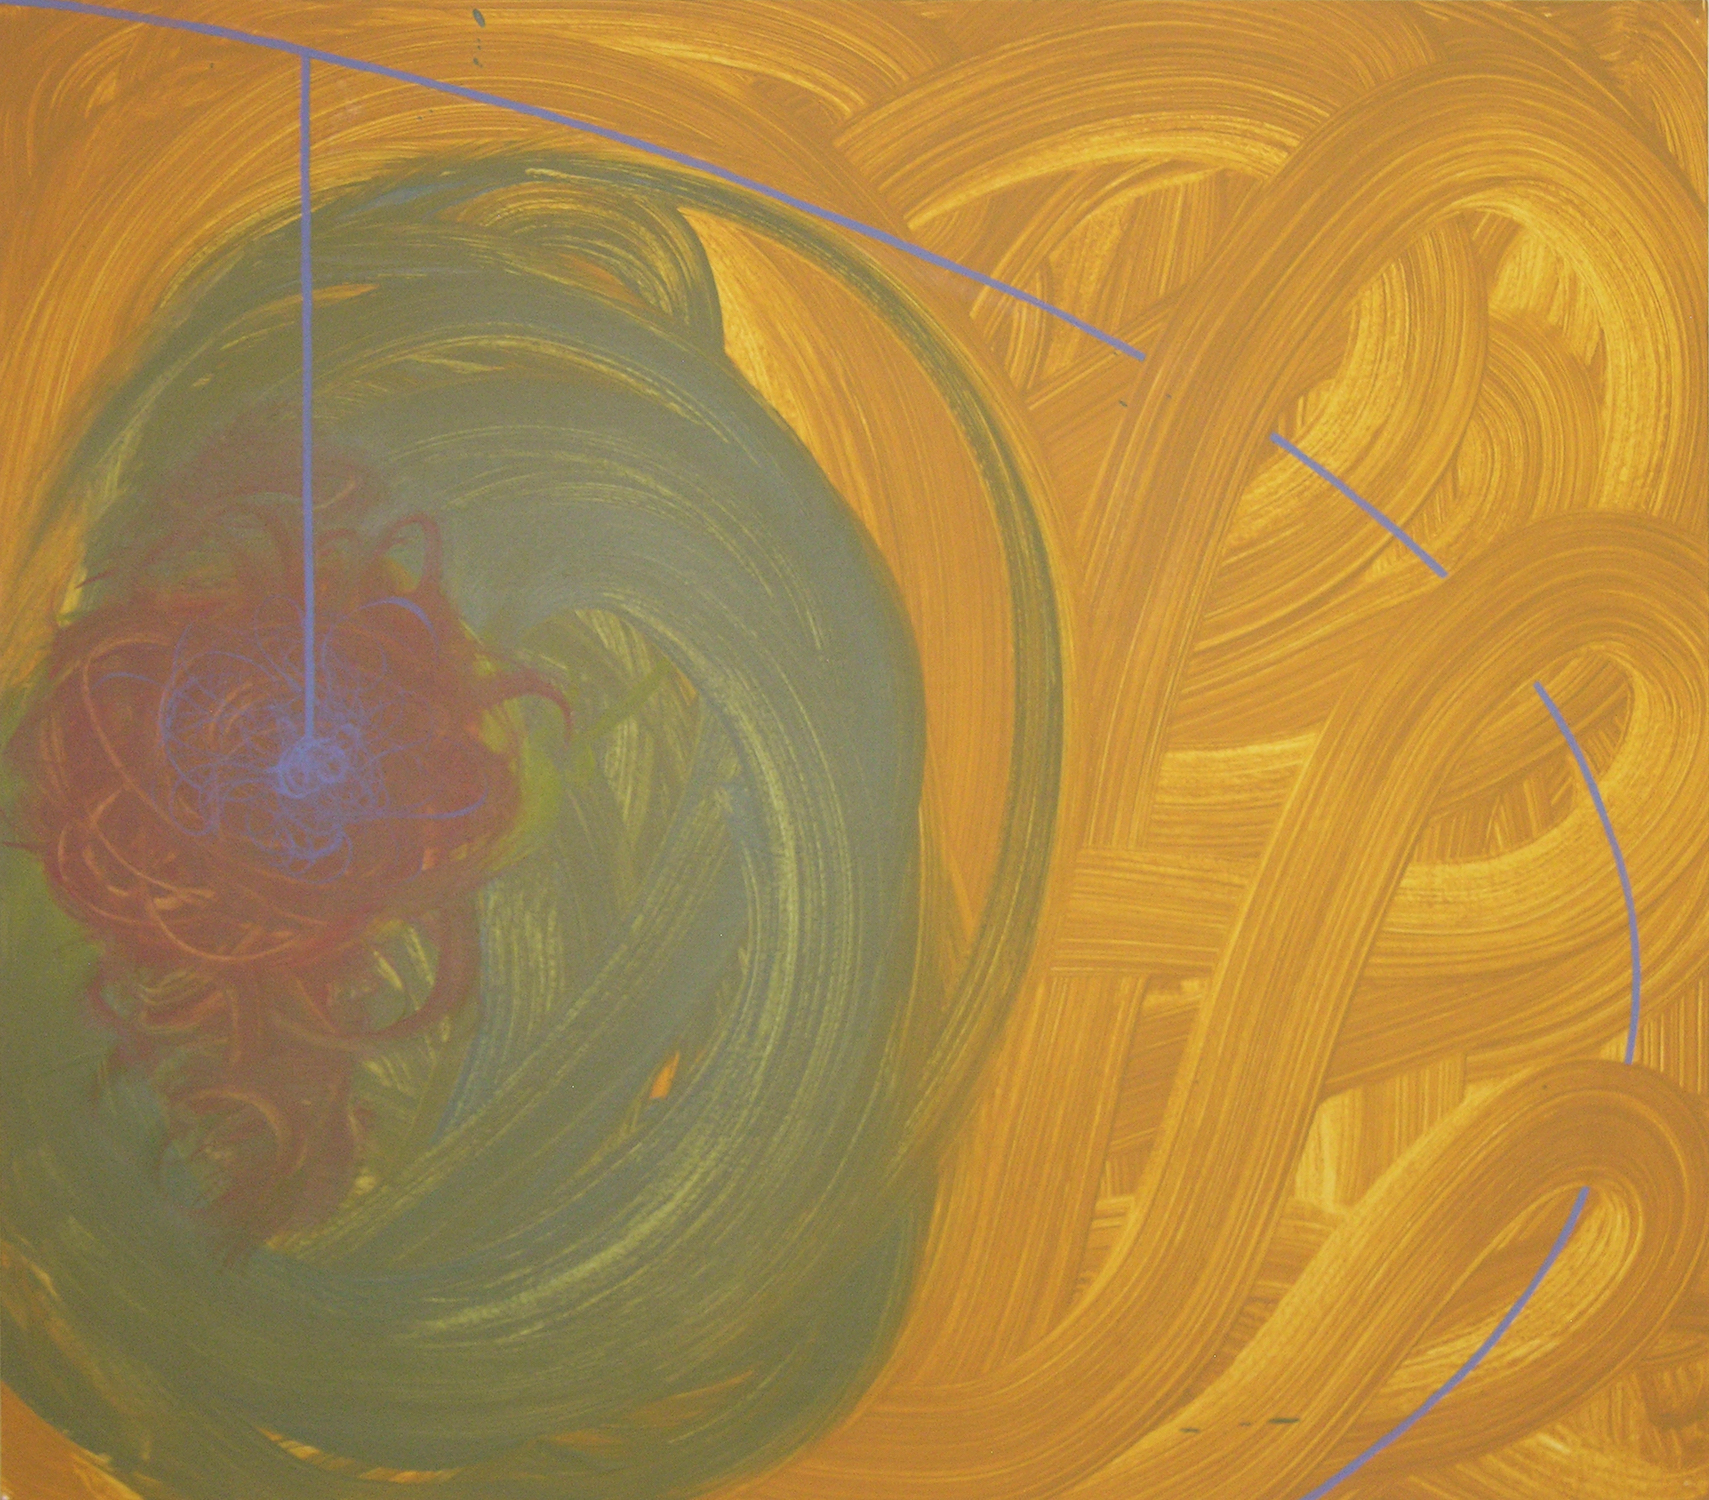  Cauldron, 2015  oil on panel, 40 x 48 inches (101 x 121 cm)  